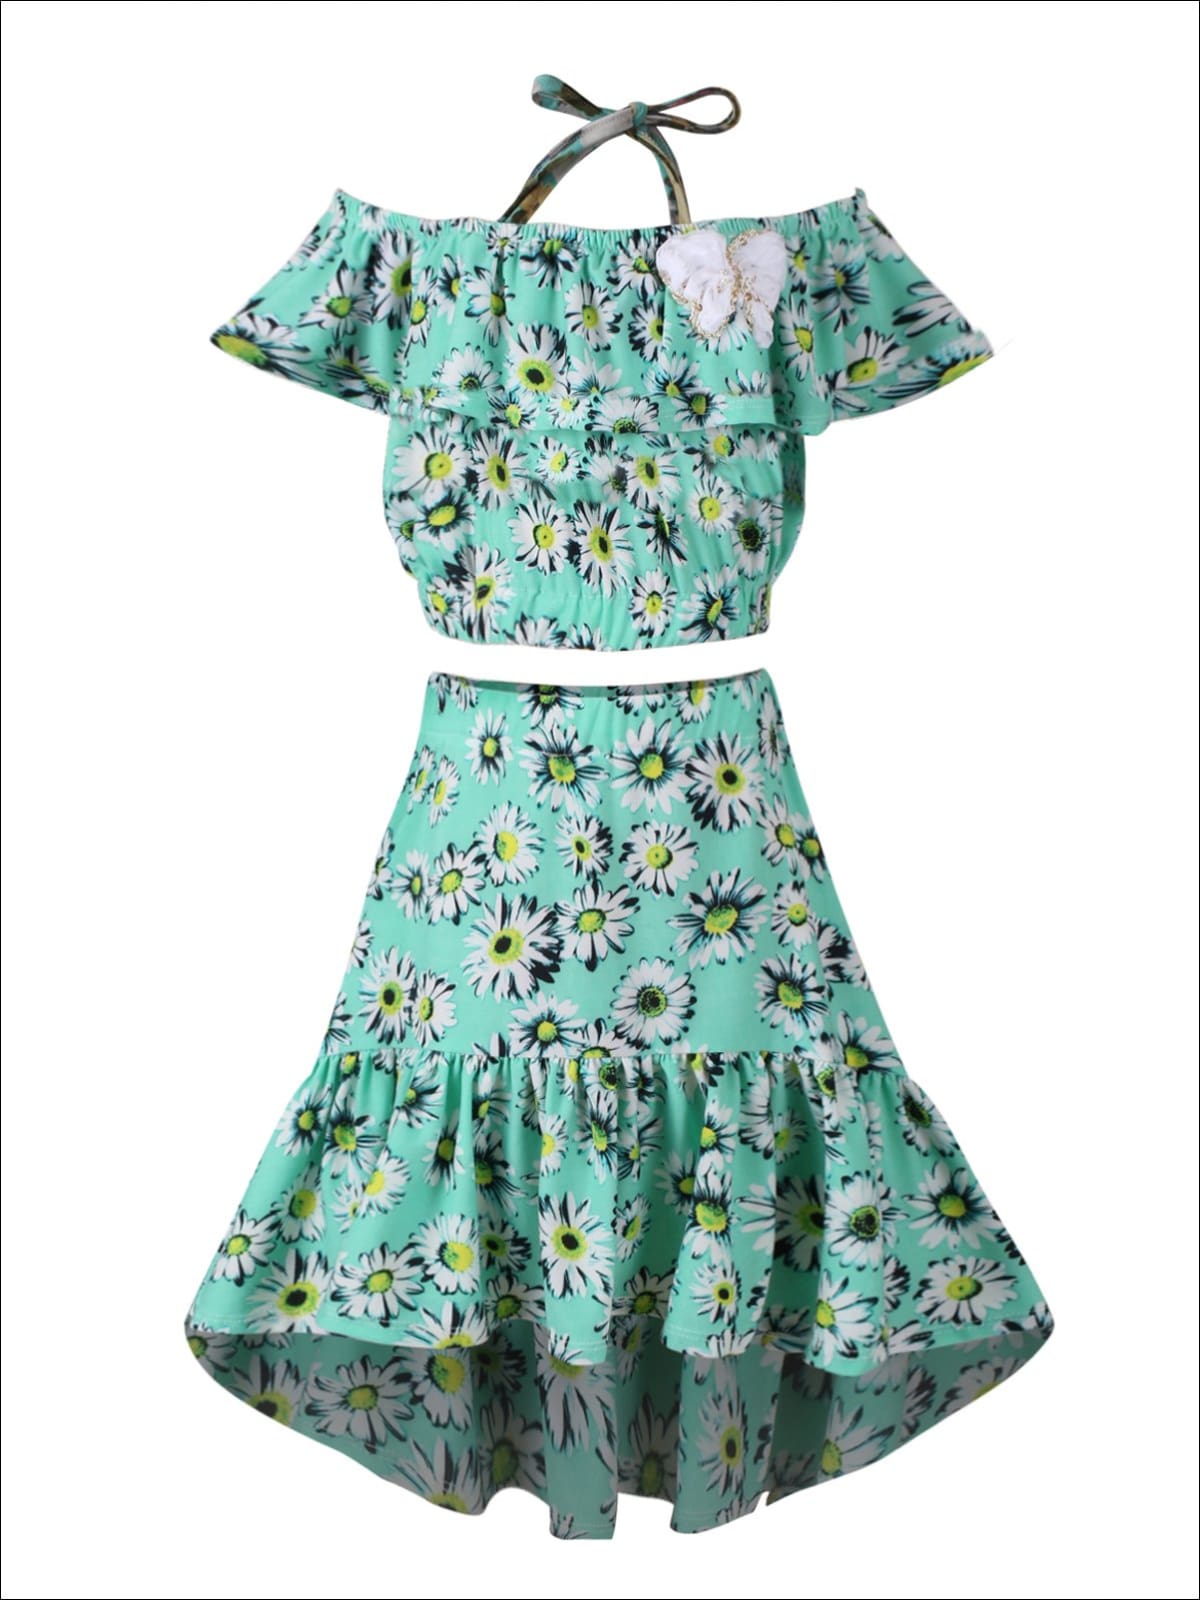 Toddler Spring Clothes | Girls Halter Ruffle Bib Top And Hi-Lo Skirt ...